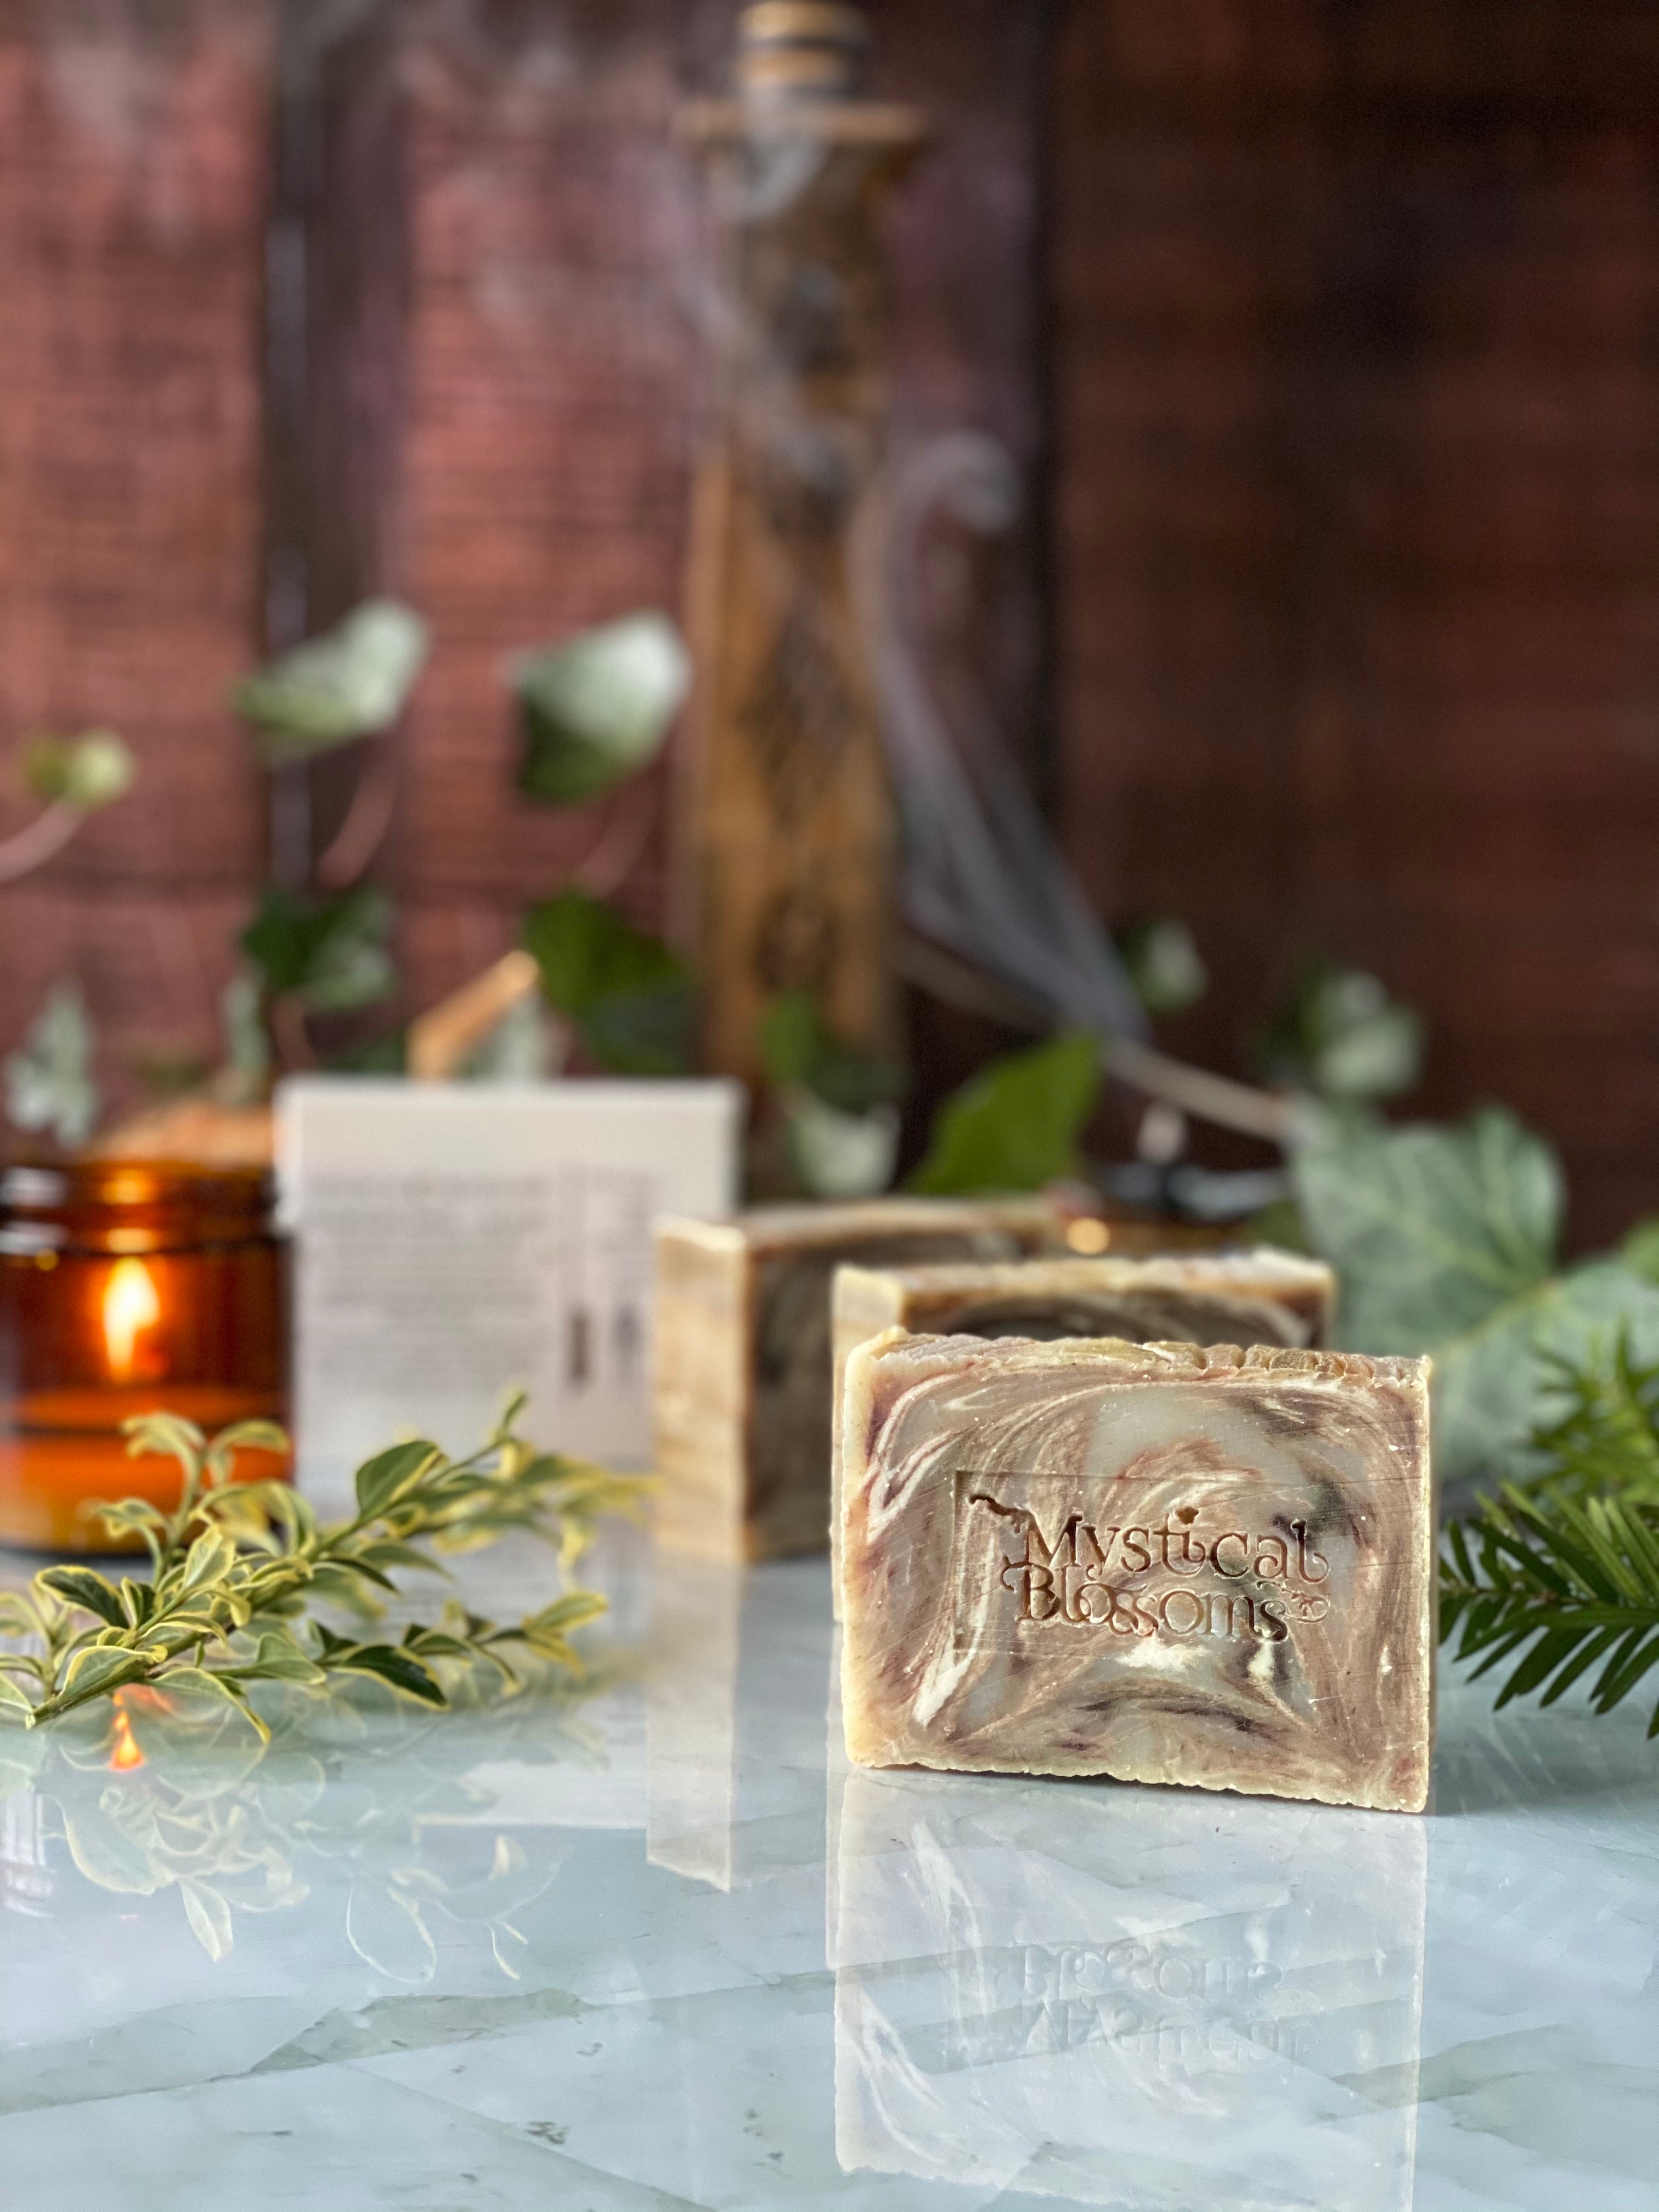 Christmas Frankincense & Myrrh Soap